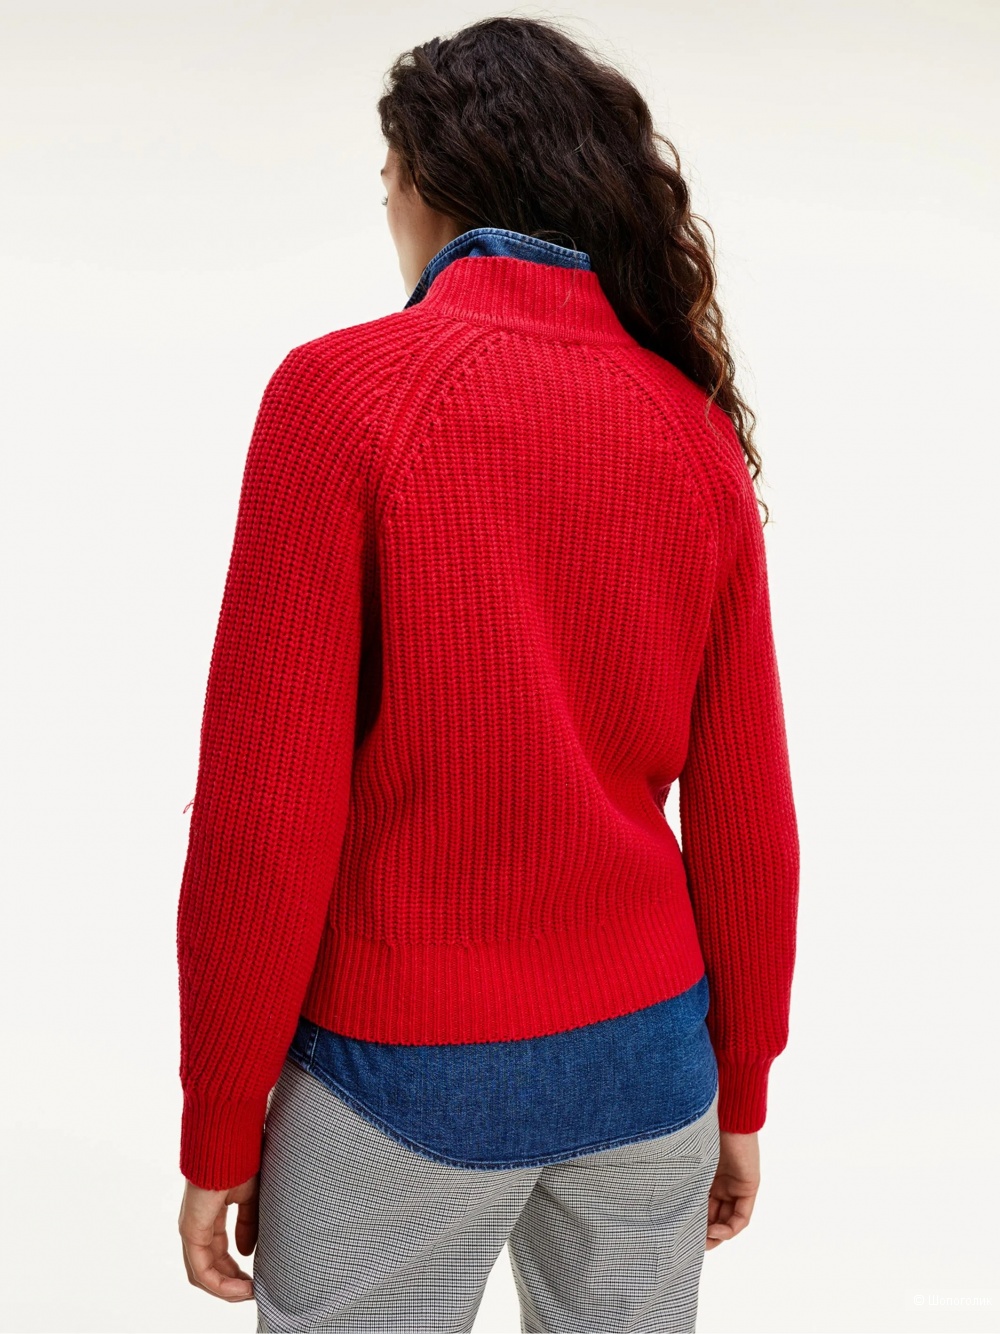 Шерстяной свитер Tommy Hilfiger размер XL XS S M